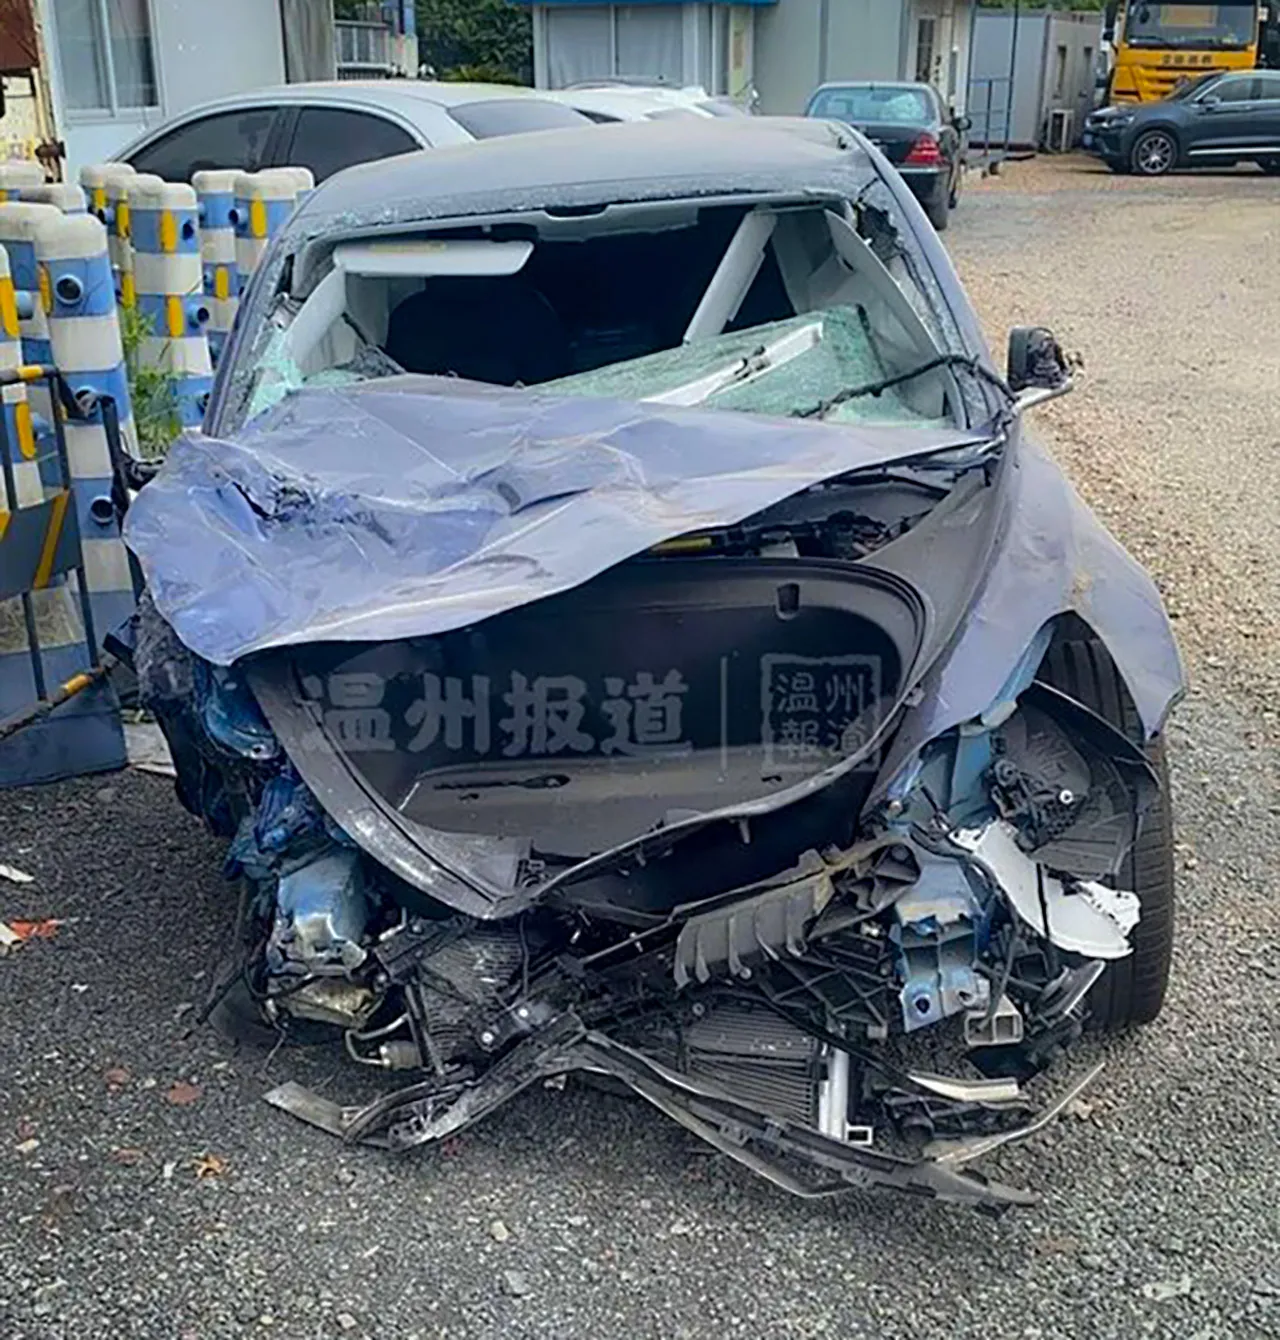 AutomobileFa Tesla Model 3 Crash